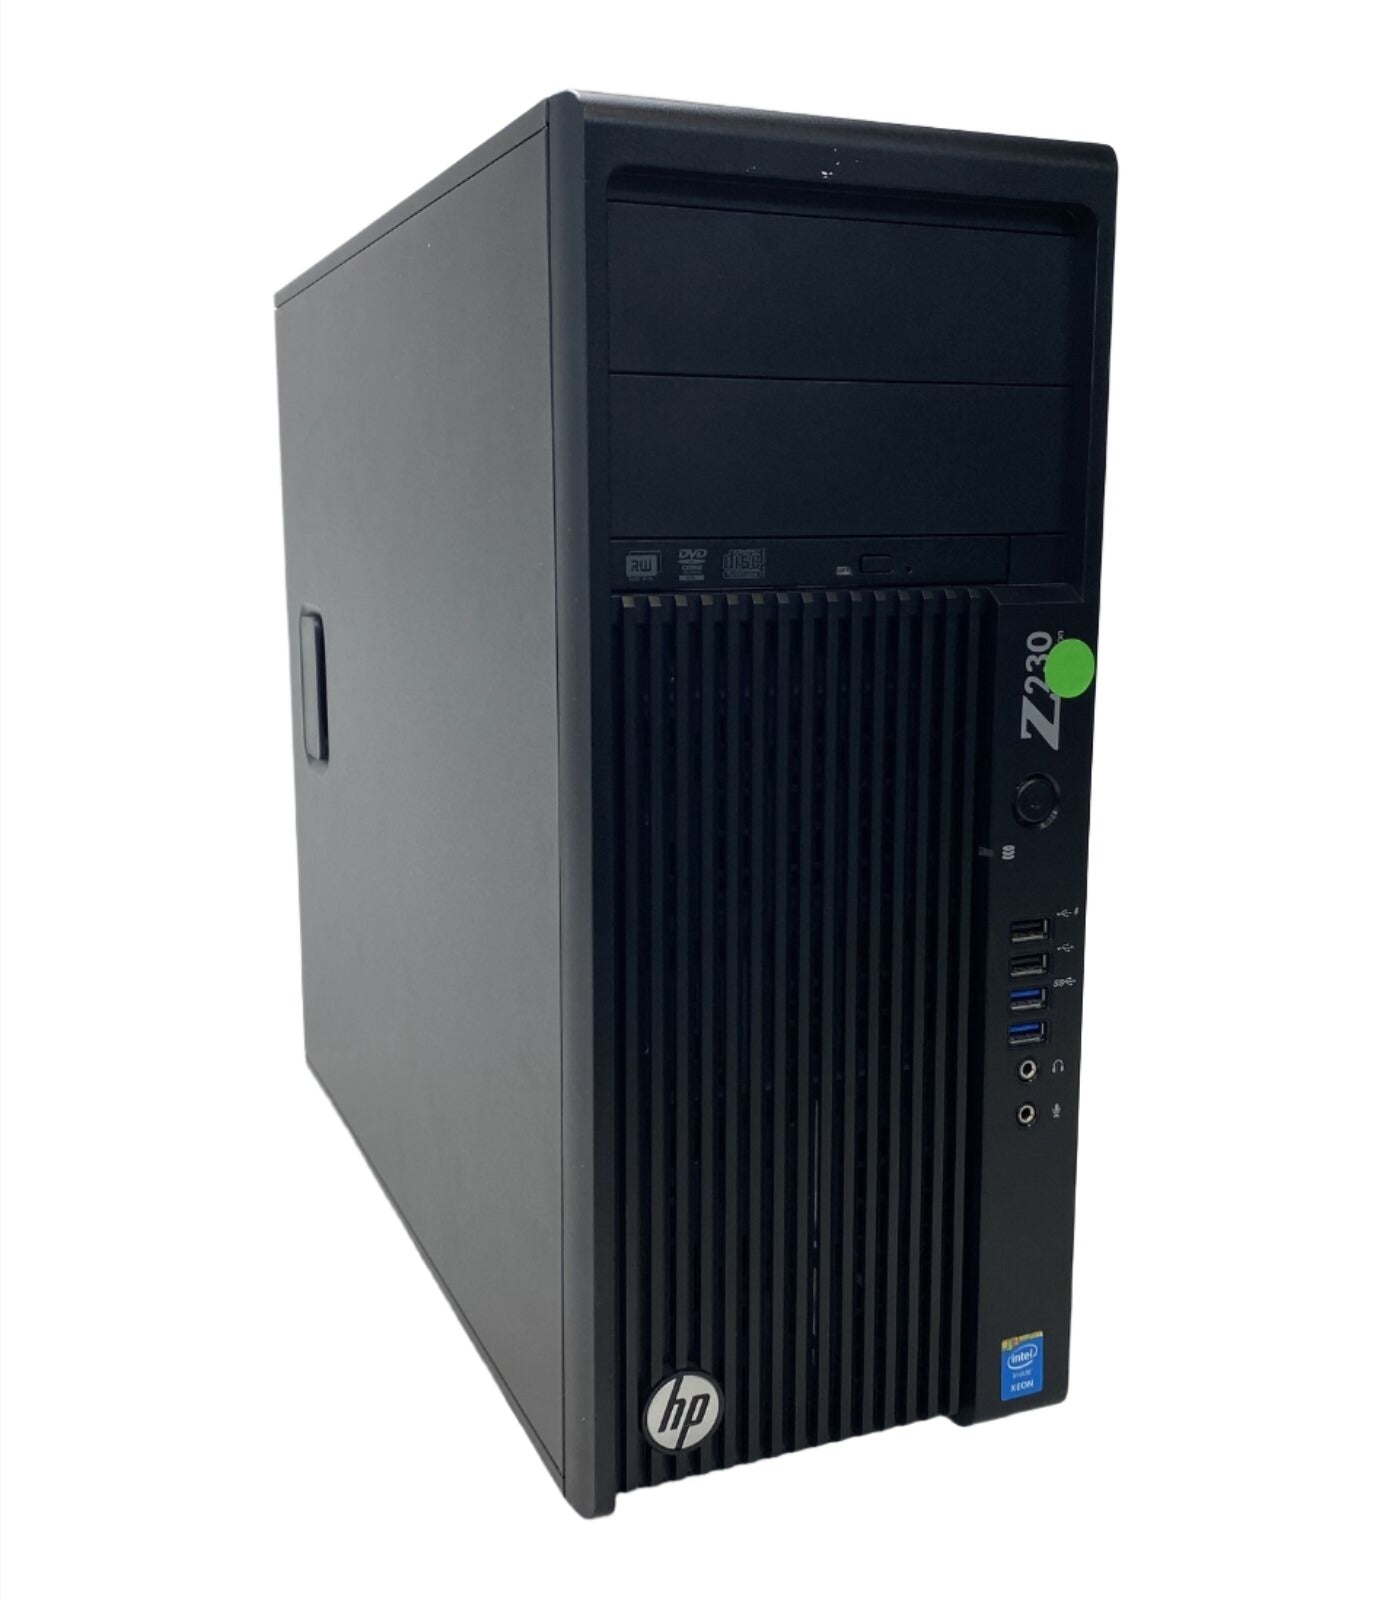 HP Z230 Workstation Towers Xeon E3-1231 V3 3.20ghz 8GB Ram NO HDD (Refurbished)